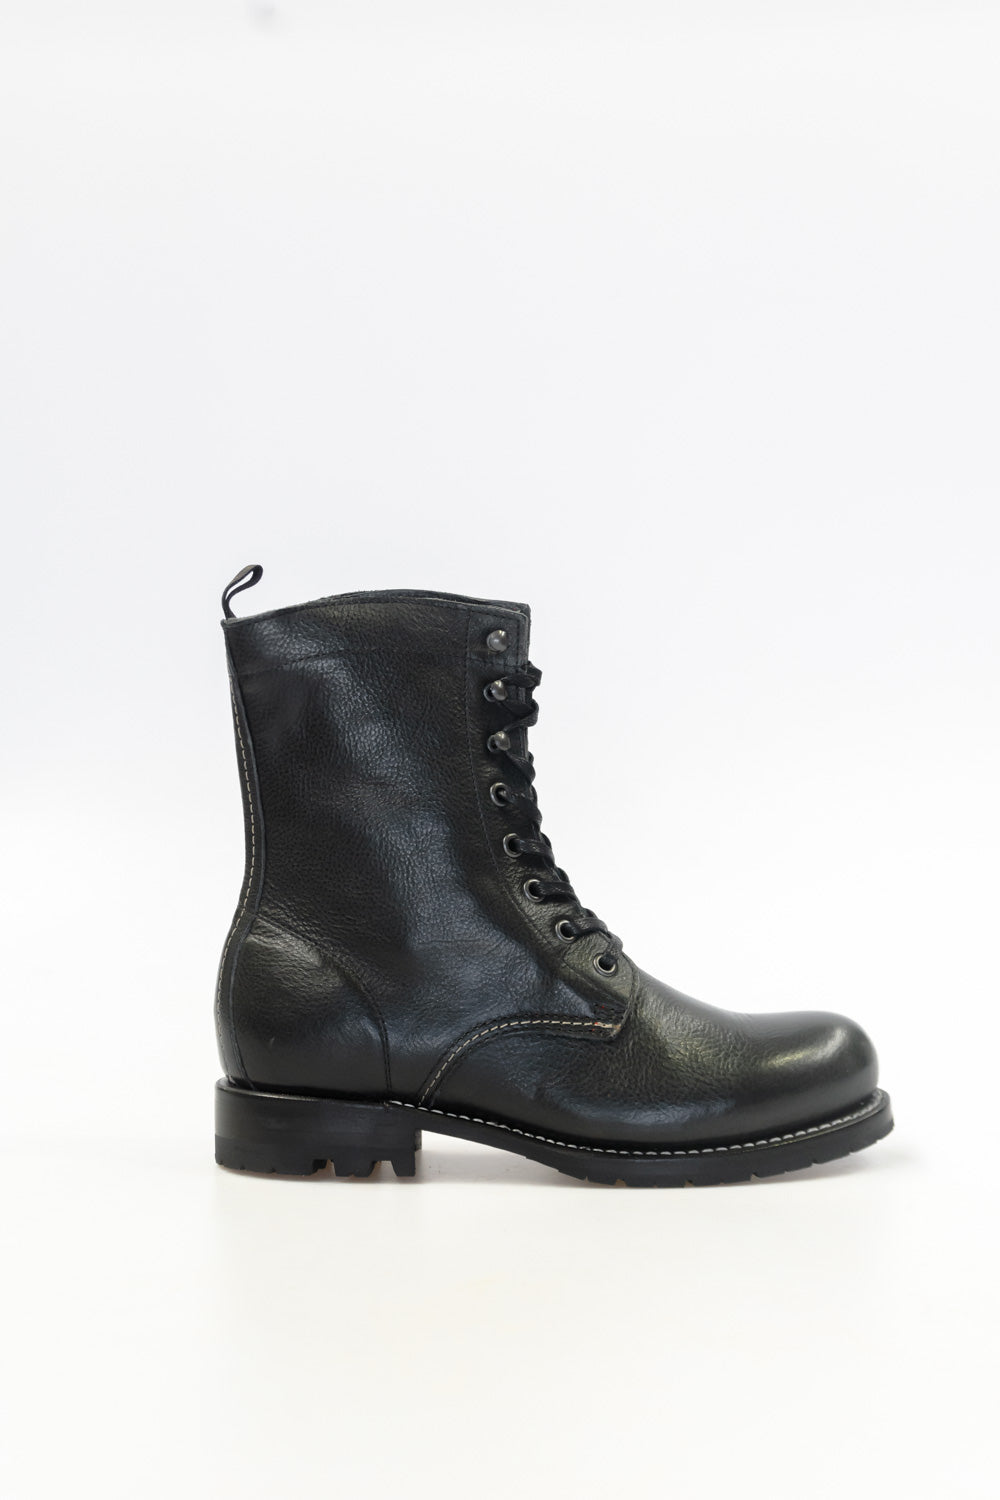 Merla Moto Black Leather Boots